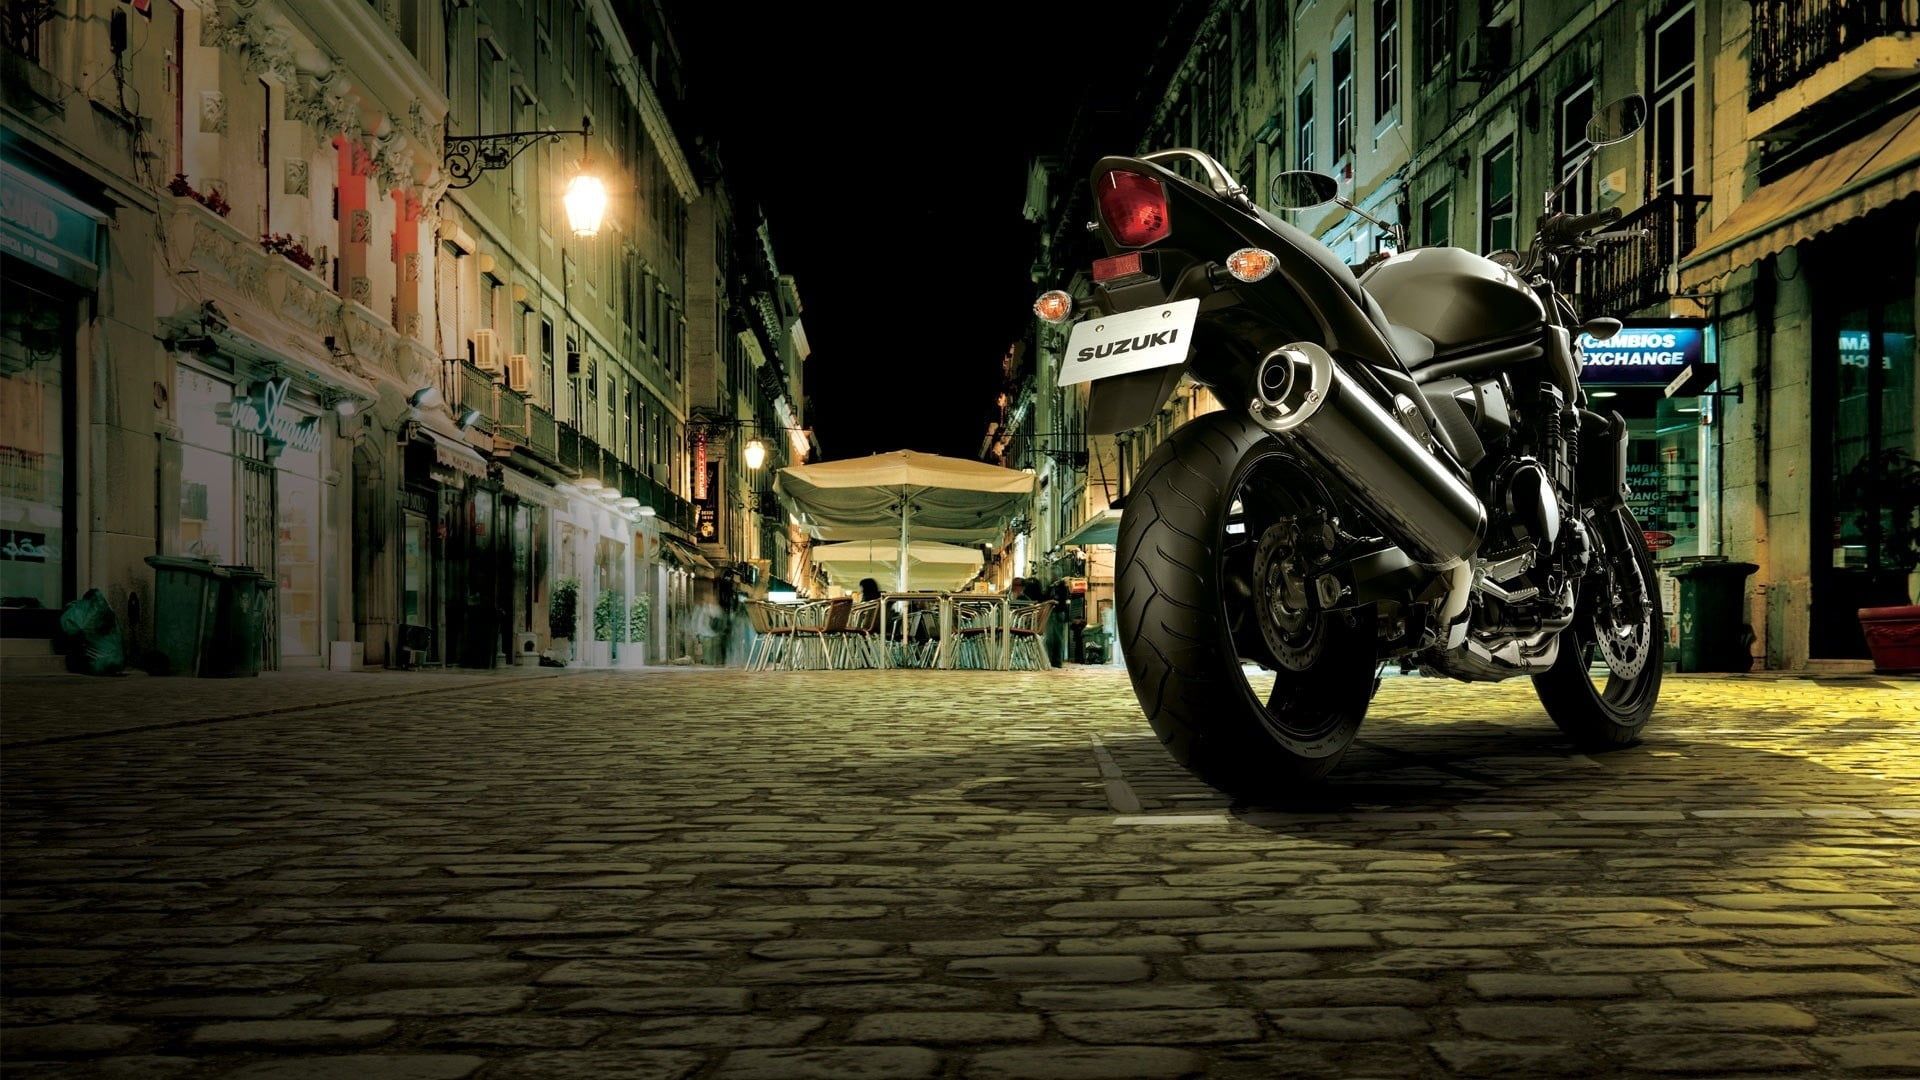 Black naked bike wallpaper, motorcycle, Suzuki, night, cityscape